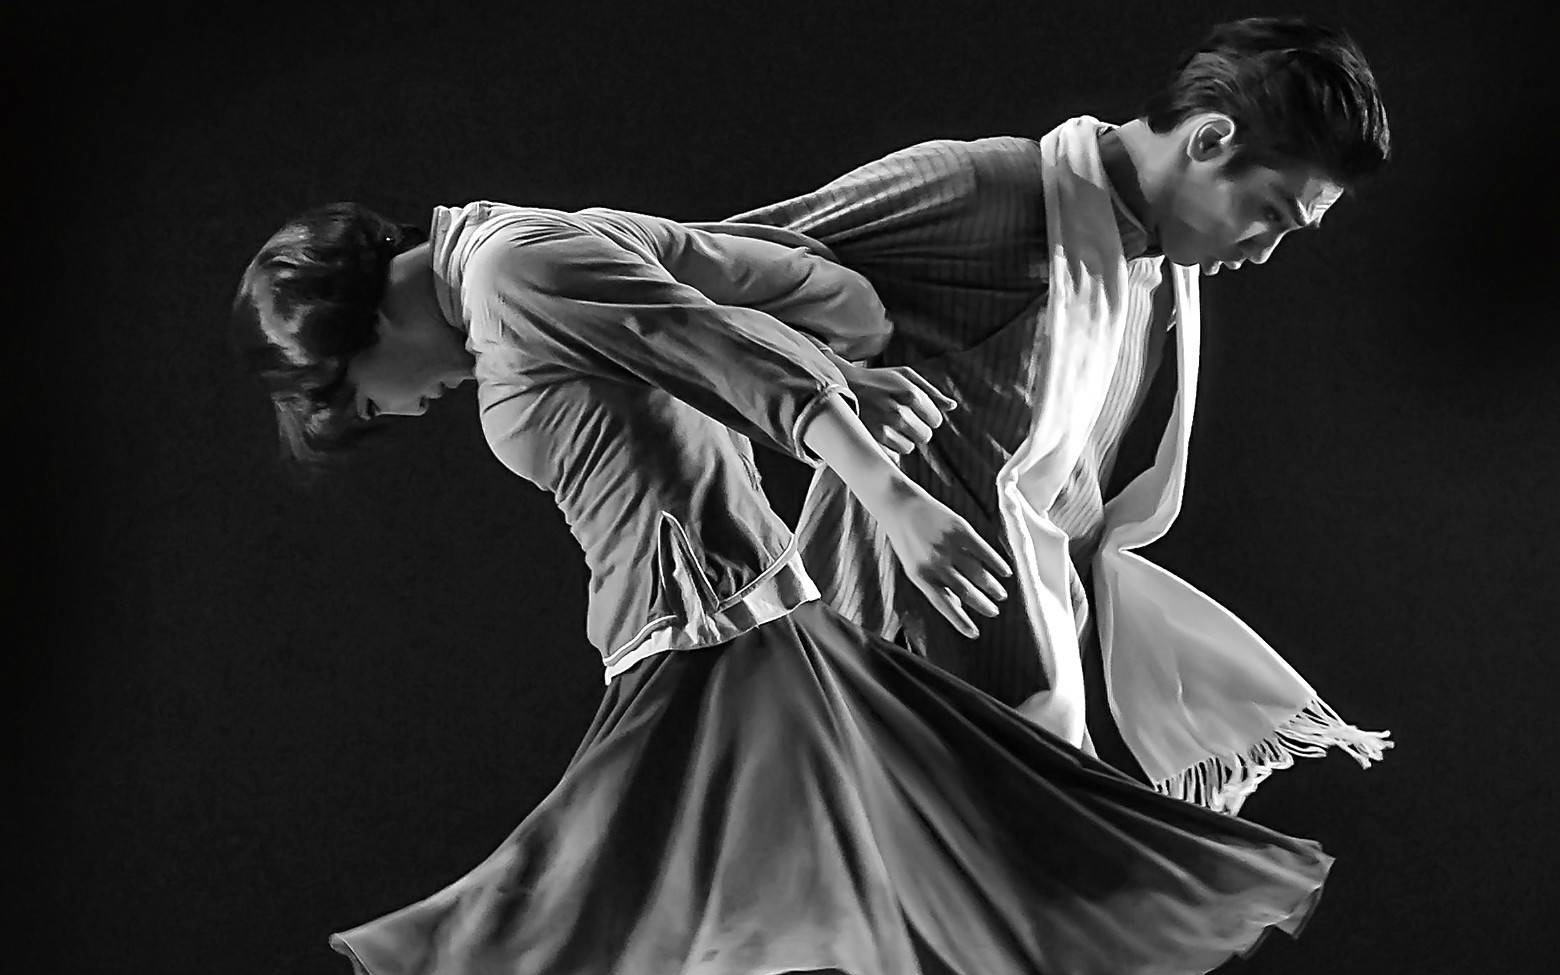 Gala des Etoiles 2015演出芭蕾舞剧《仙女》双人舞剧照 - 舞蹈图片 - Powered by Discuz!